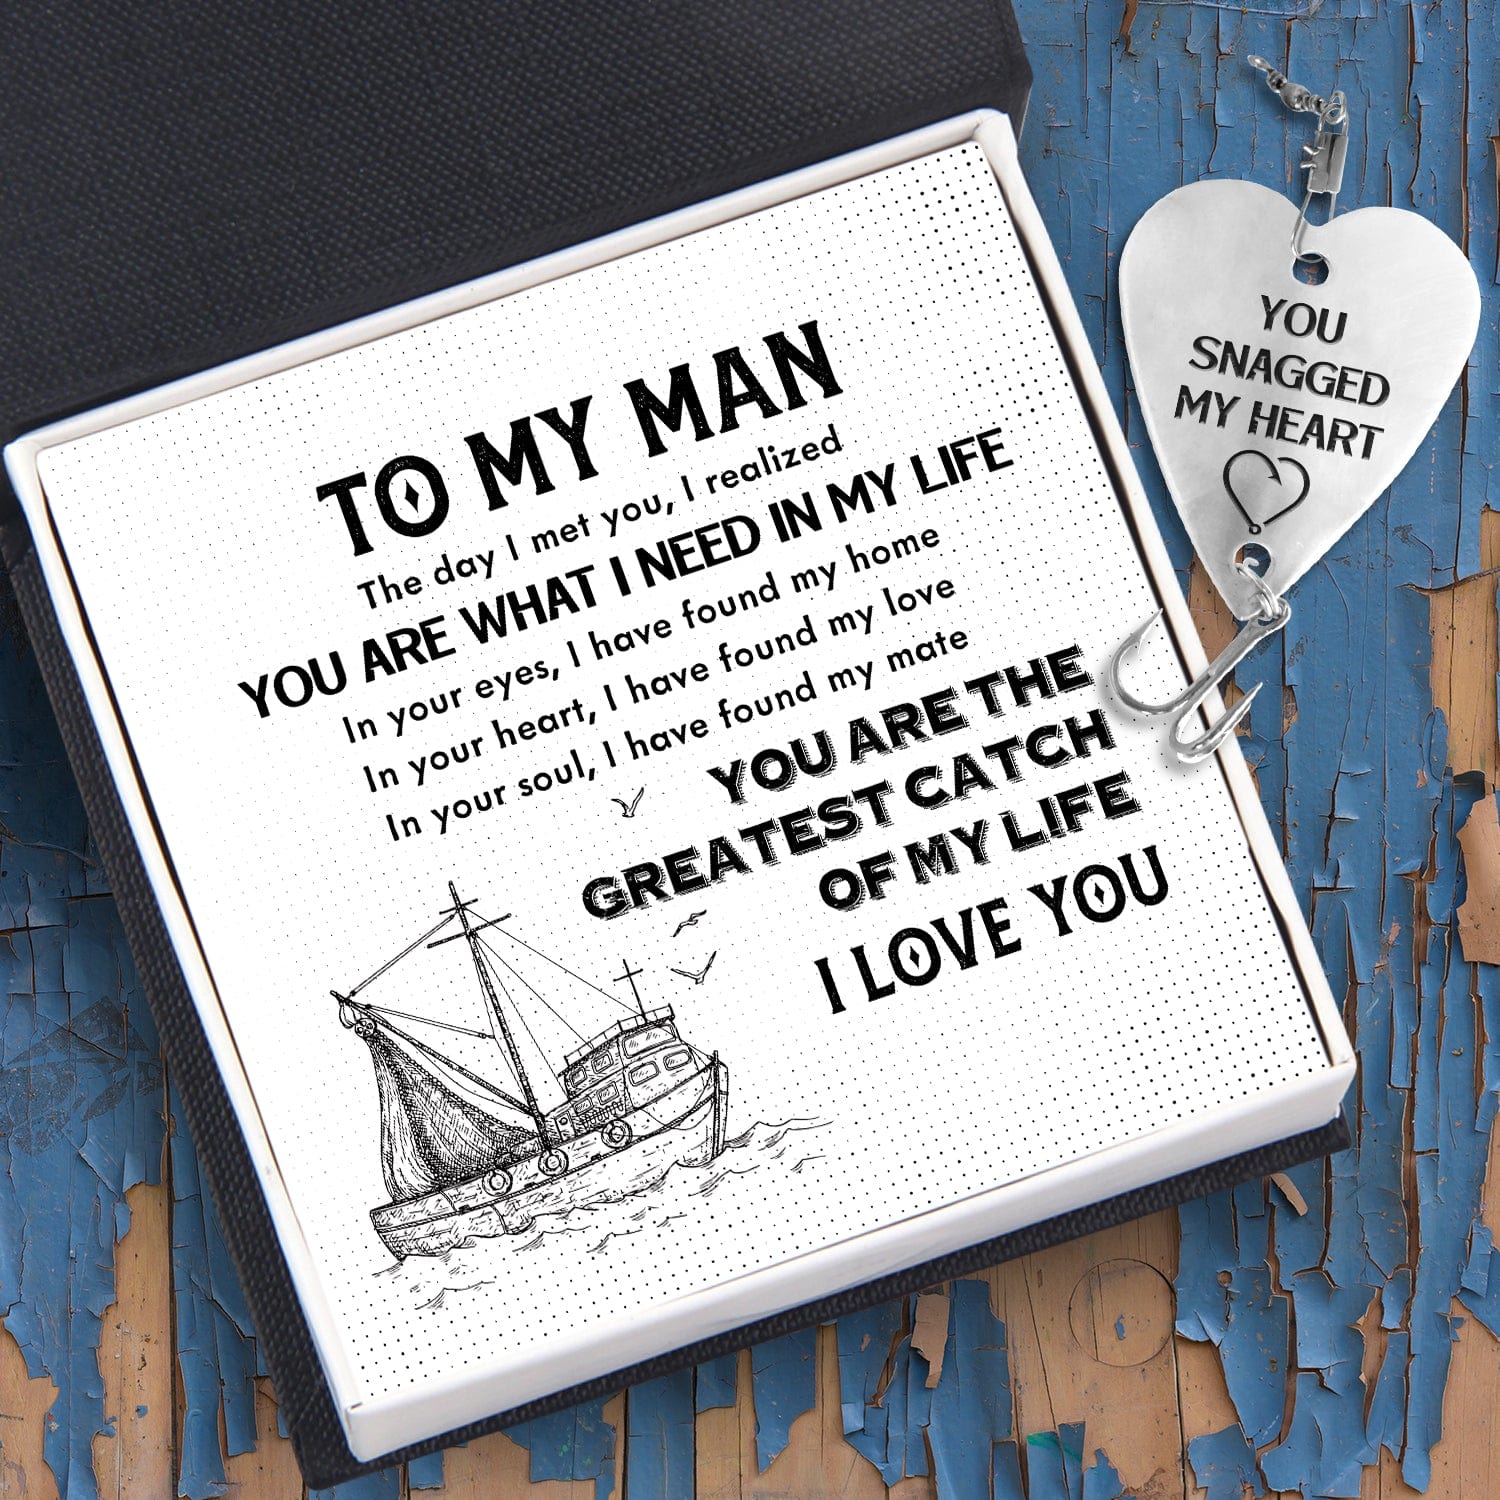 Heart Fishing Lure - Fishing - To My Reel Man - I Reel-y Love You - Gf -  Wrapsify